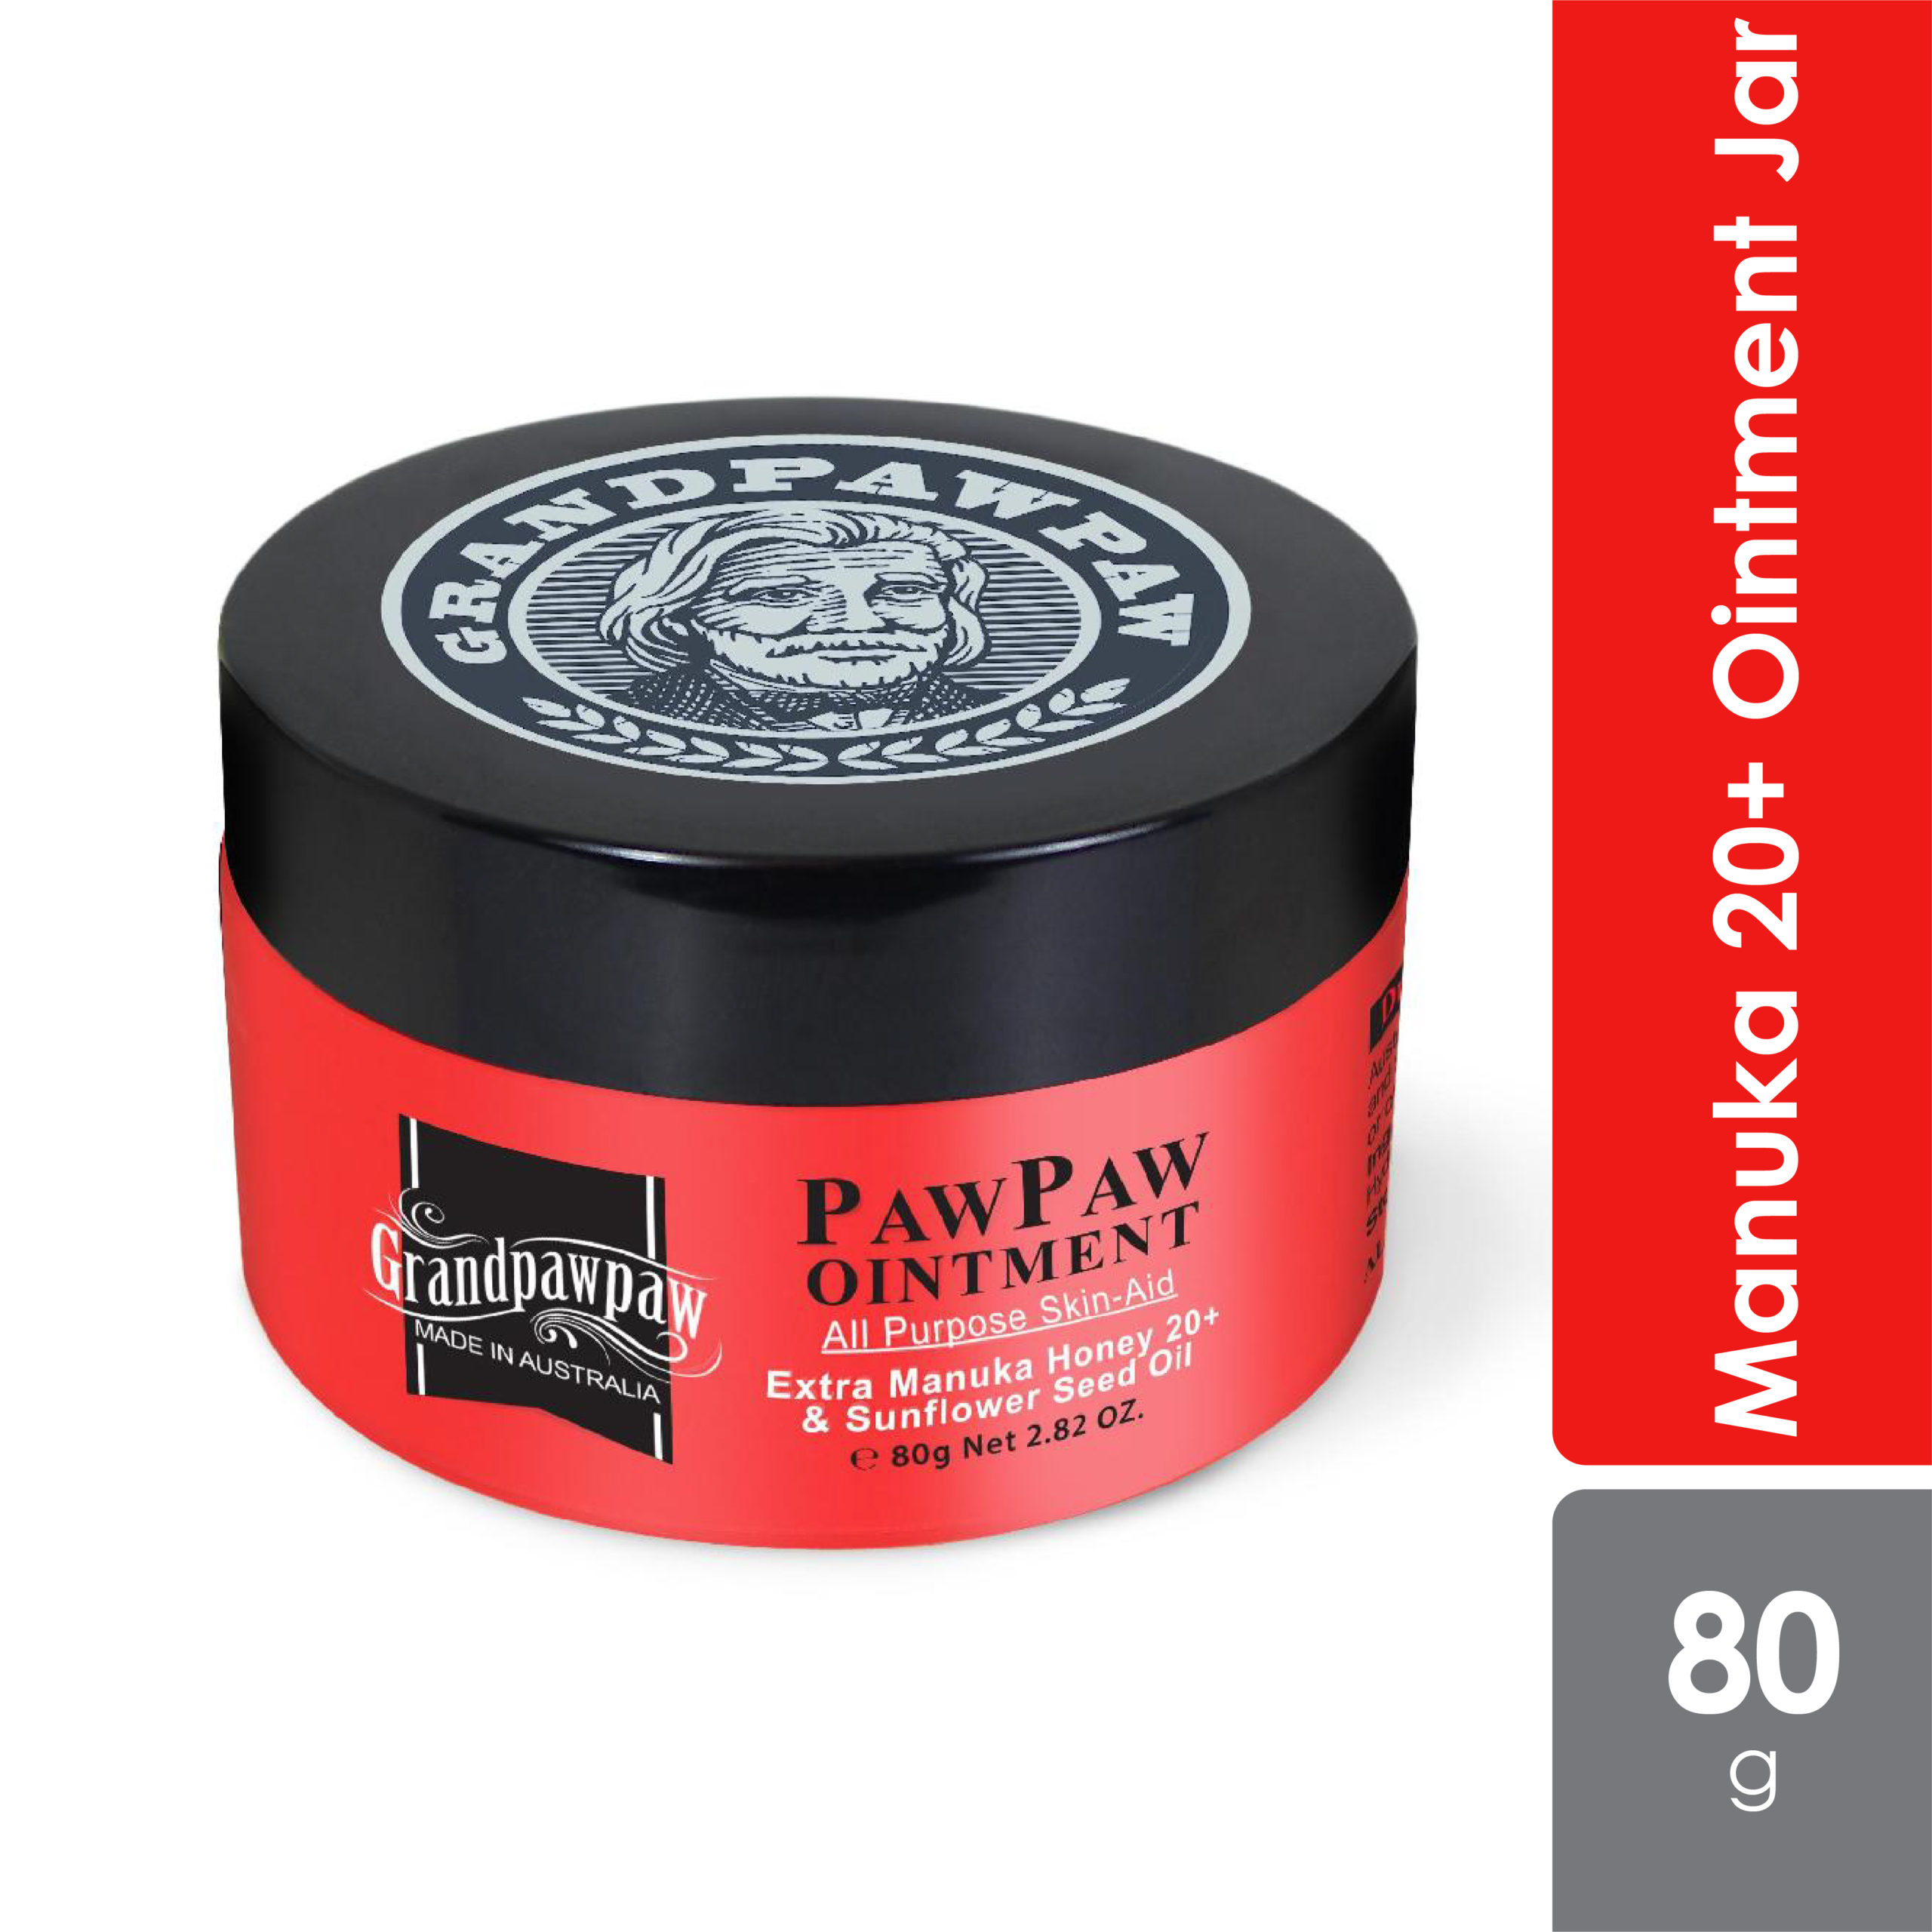 Grand Paw Paw Manuka 20+ Ointment Jar 80g